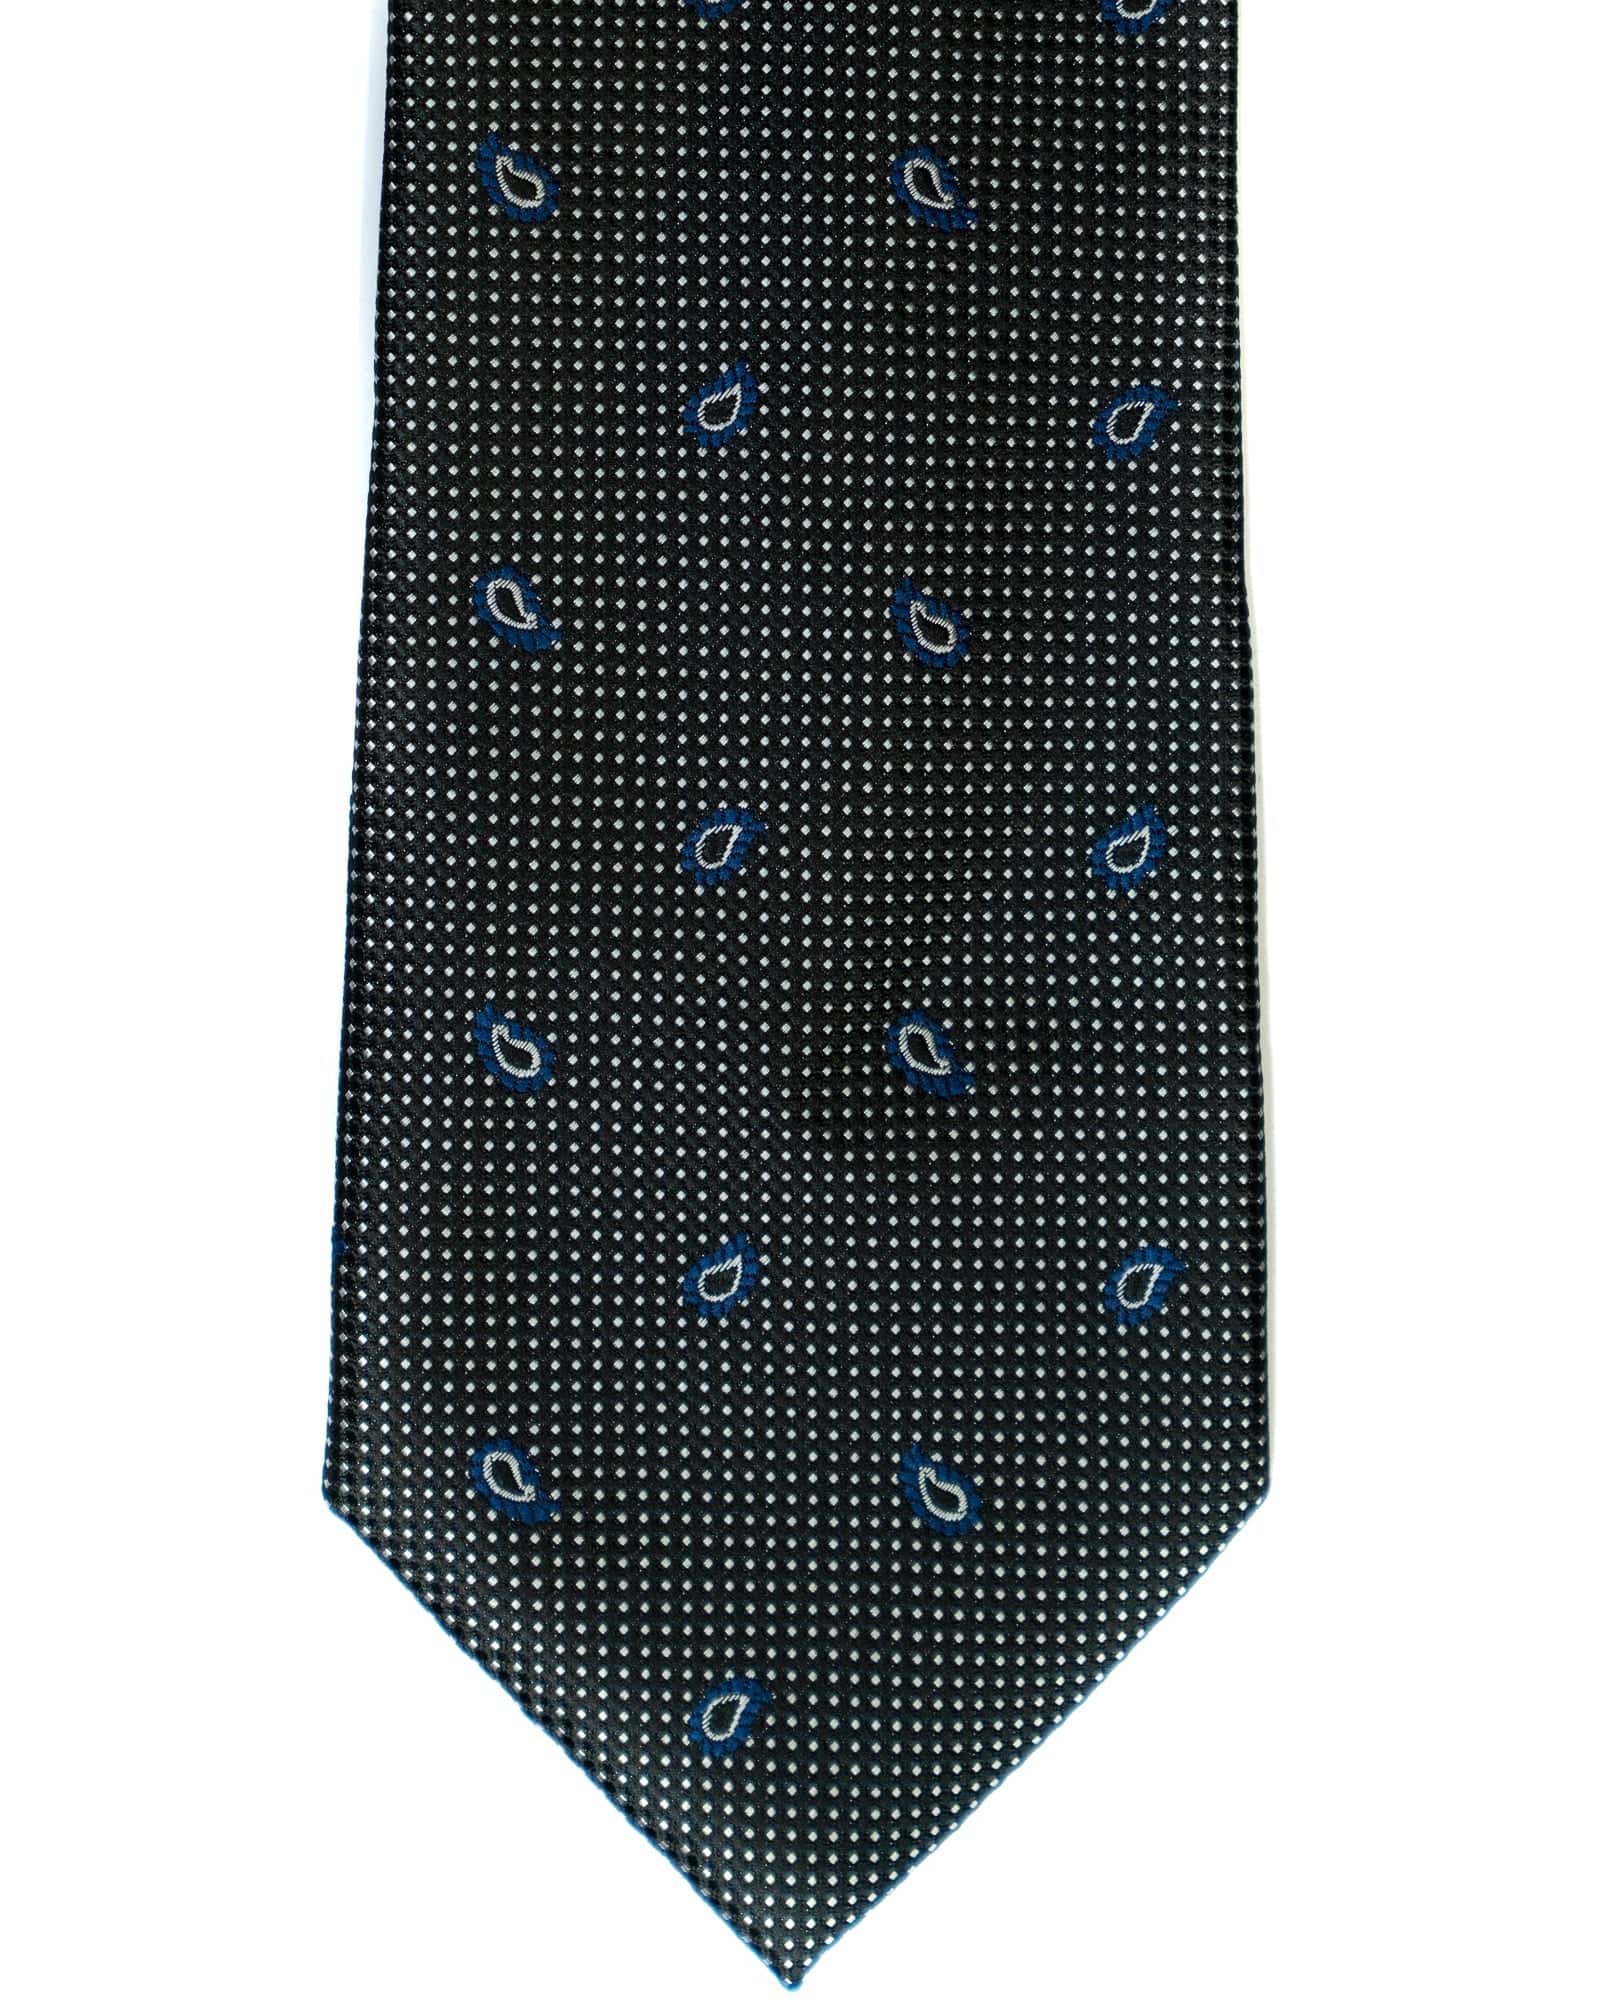 Gianfranco Foulard Tie in Black with Grey - Rainwater's Men's Clothing and Tuxedo Rental